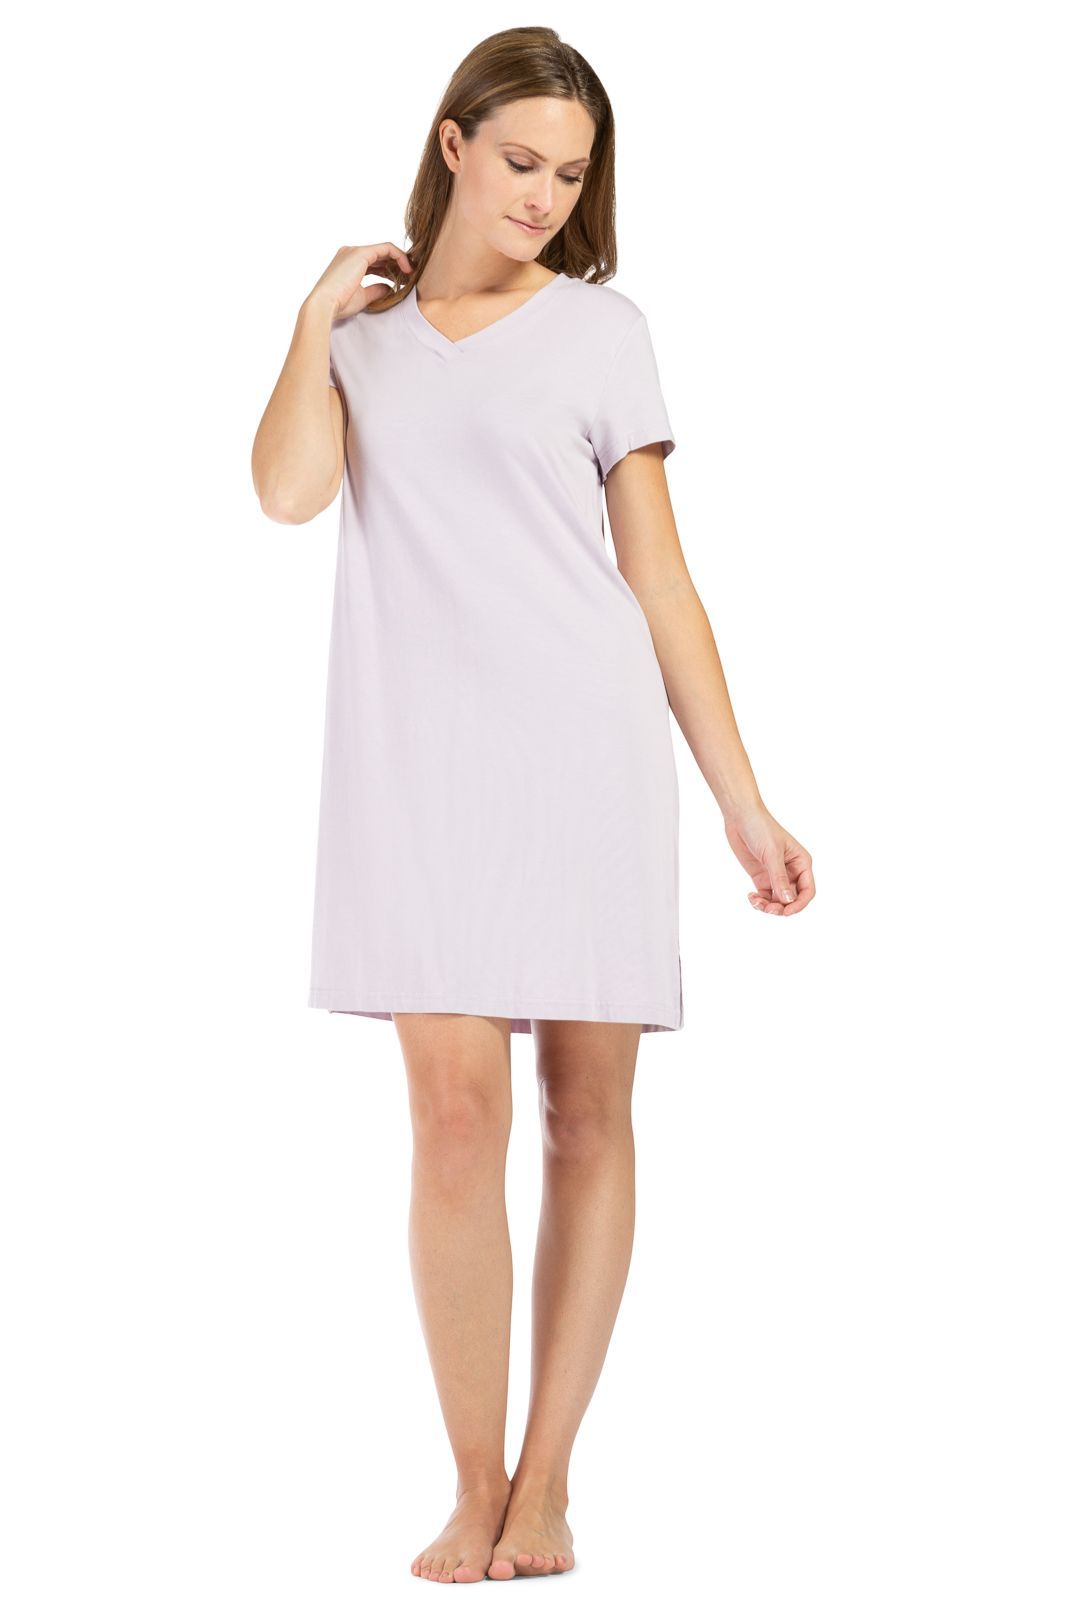 Women's Nightgowns & Sleepshirts